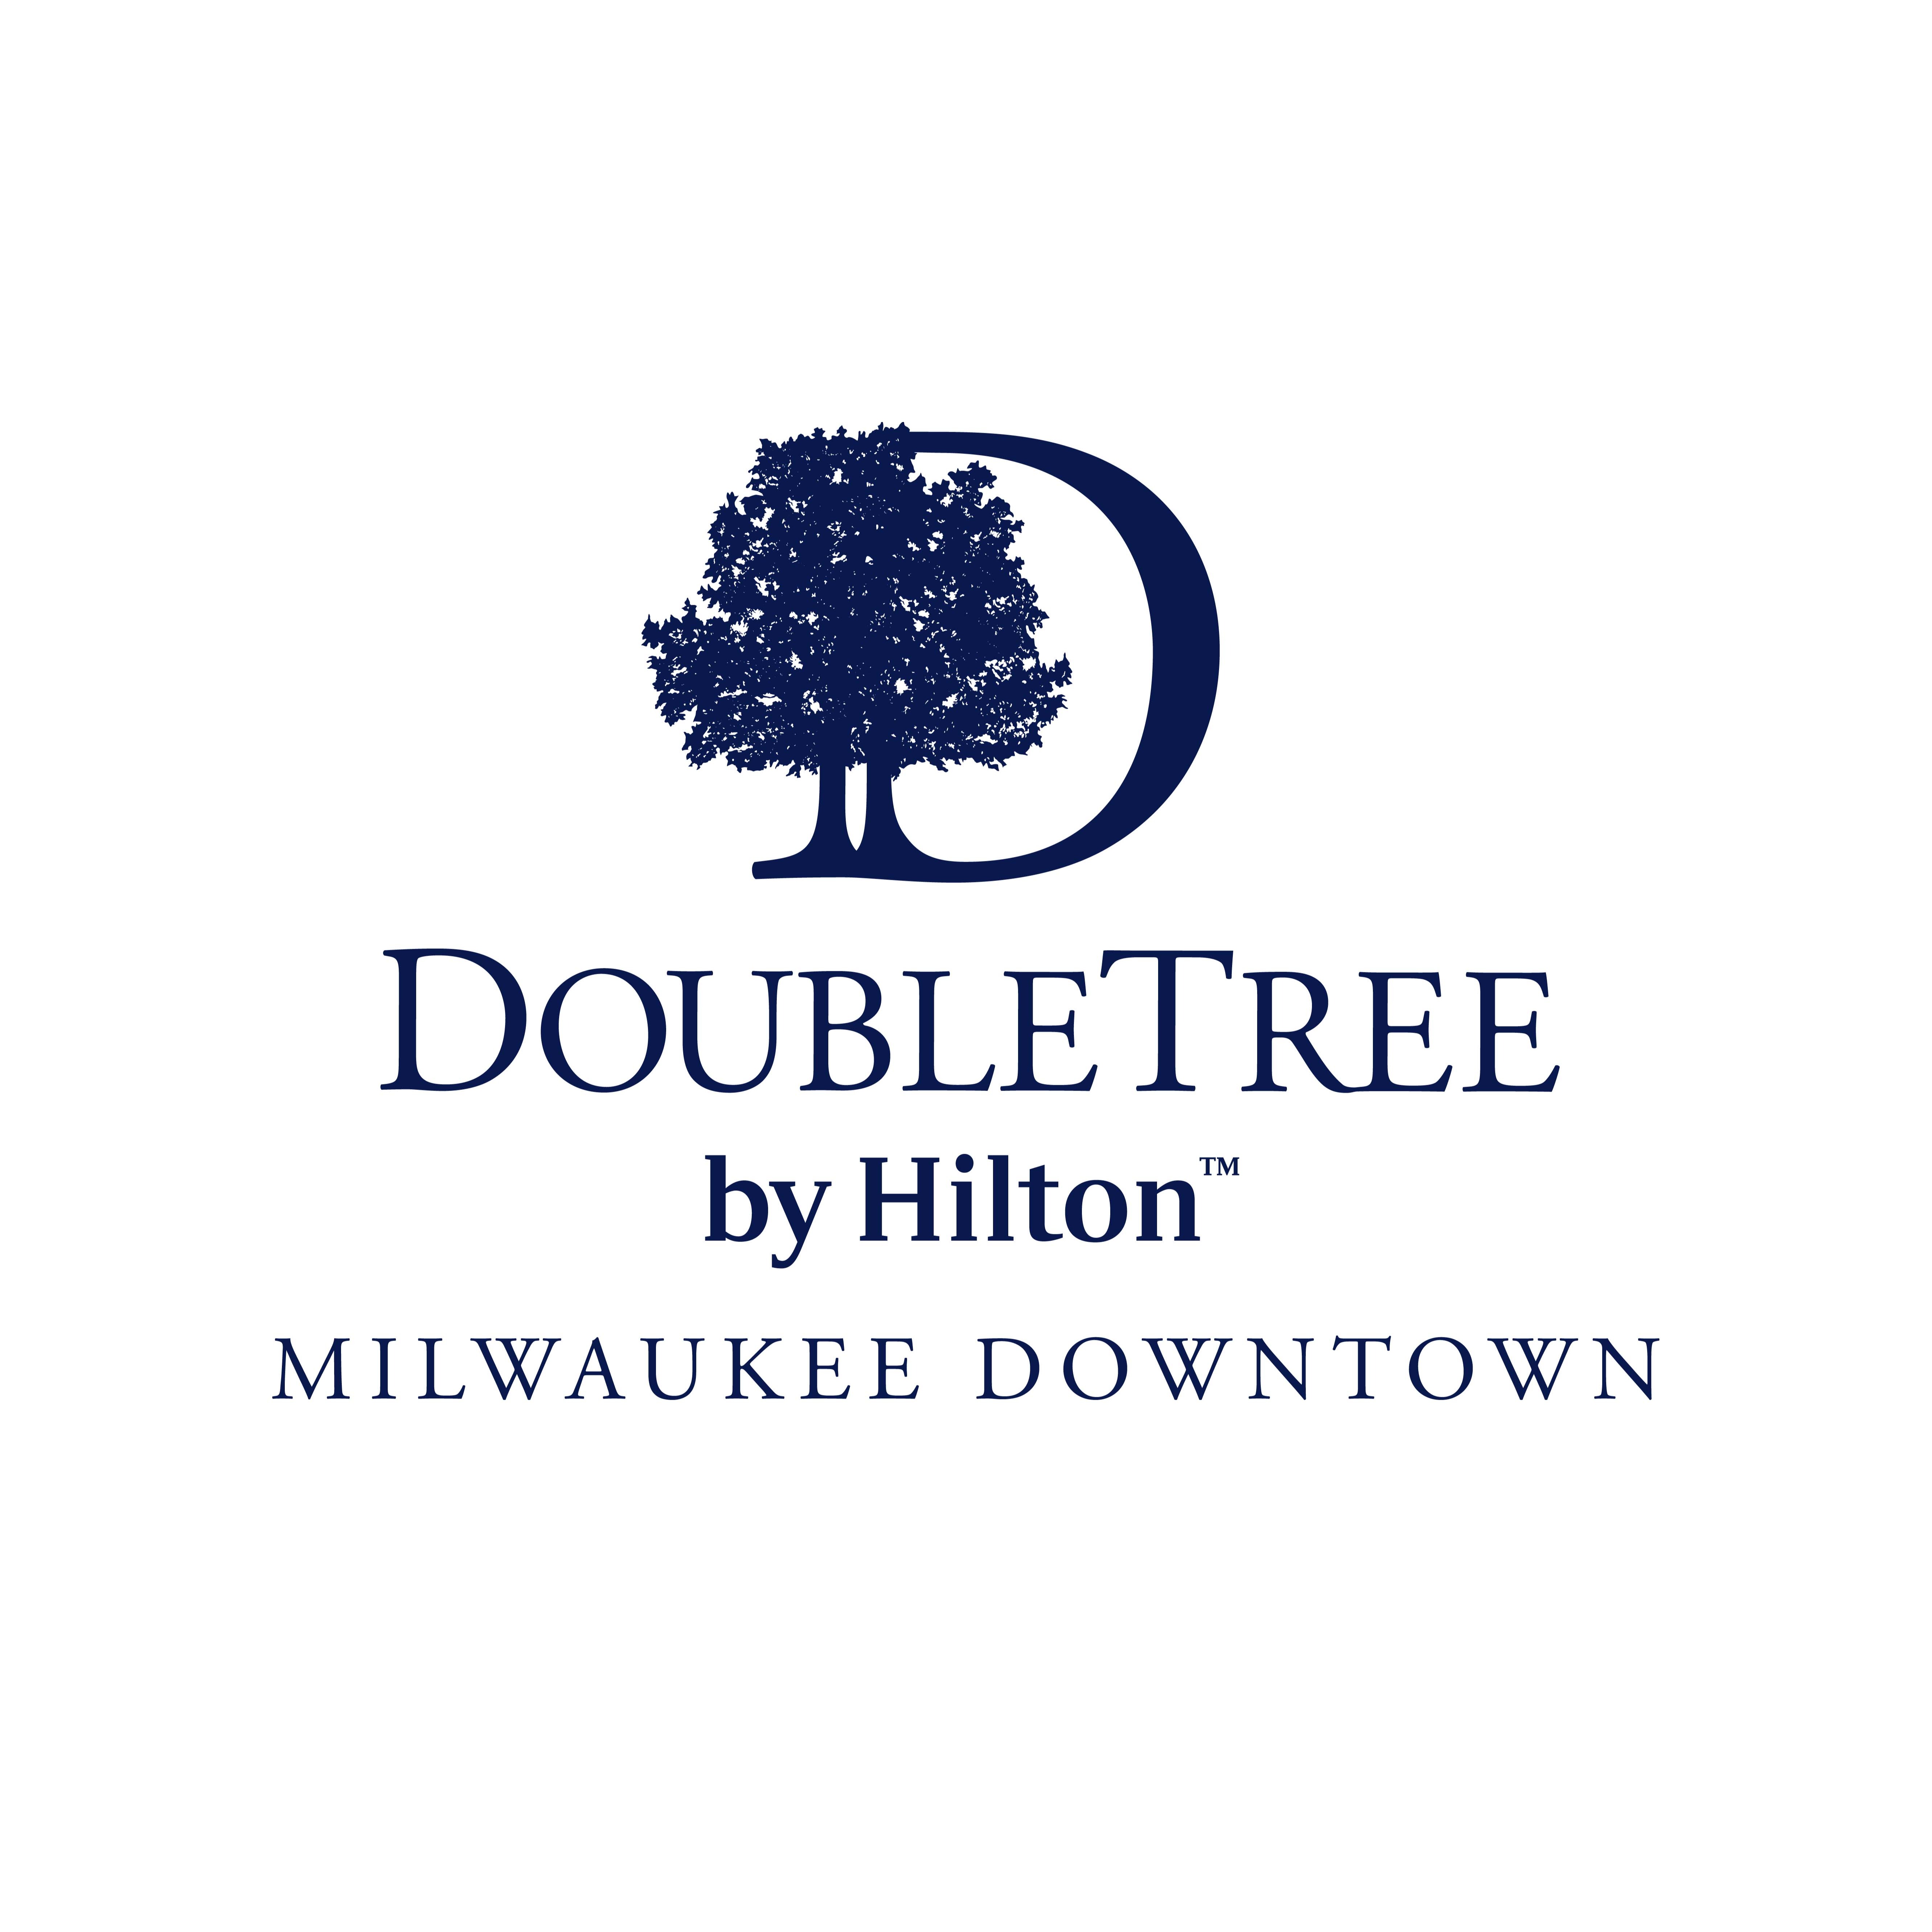 DoubleTree by Hilton Hotel Milwaukee Downtown - Milwaukee, WI 53203 - (414)273-2950 | ShowMeLocal.com